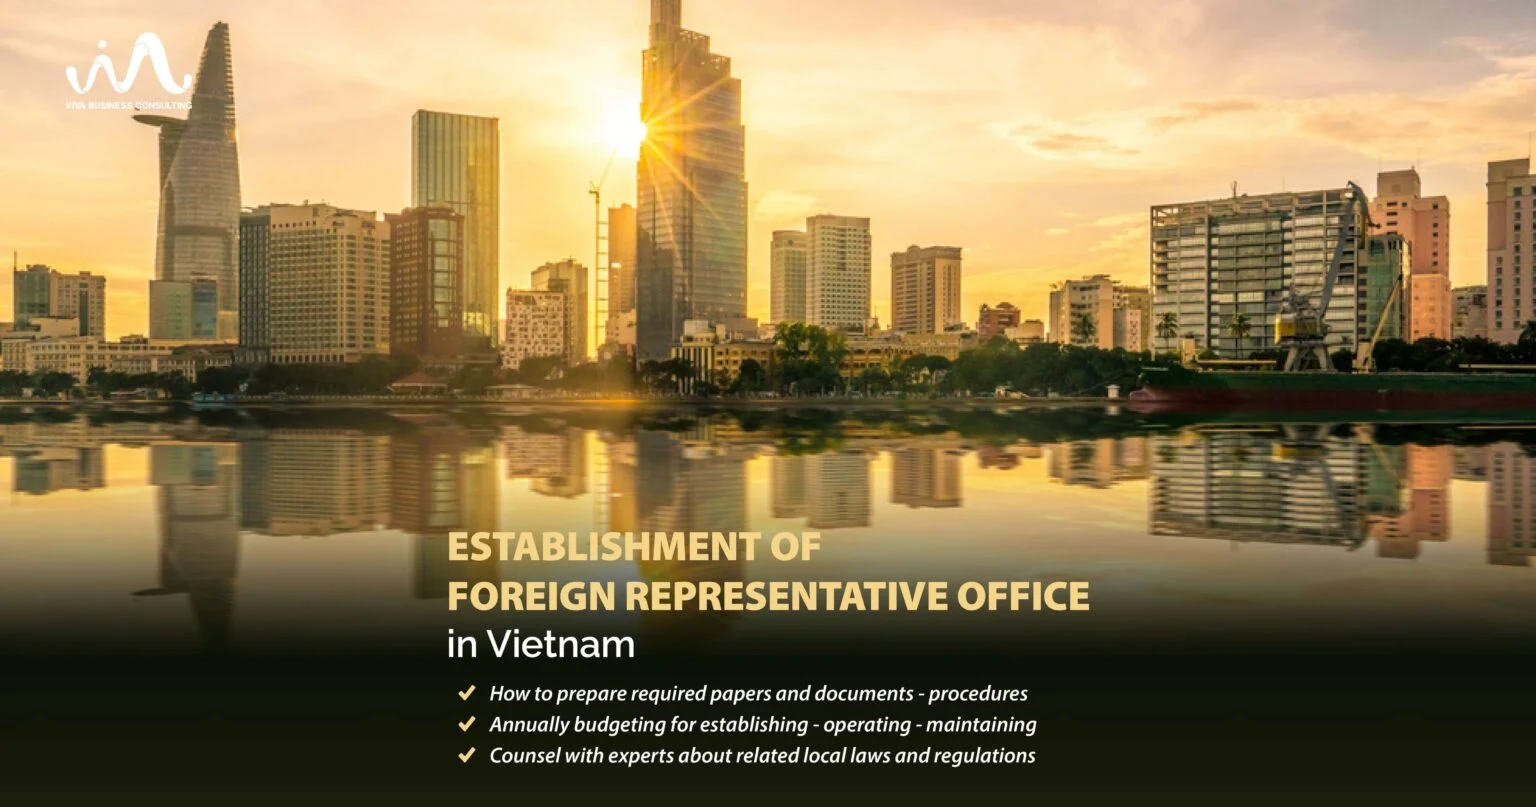 Establish foreign representative office in Vietnam